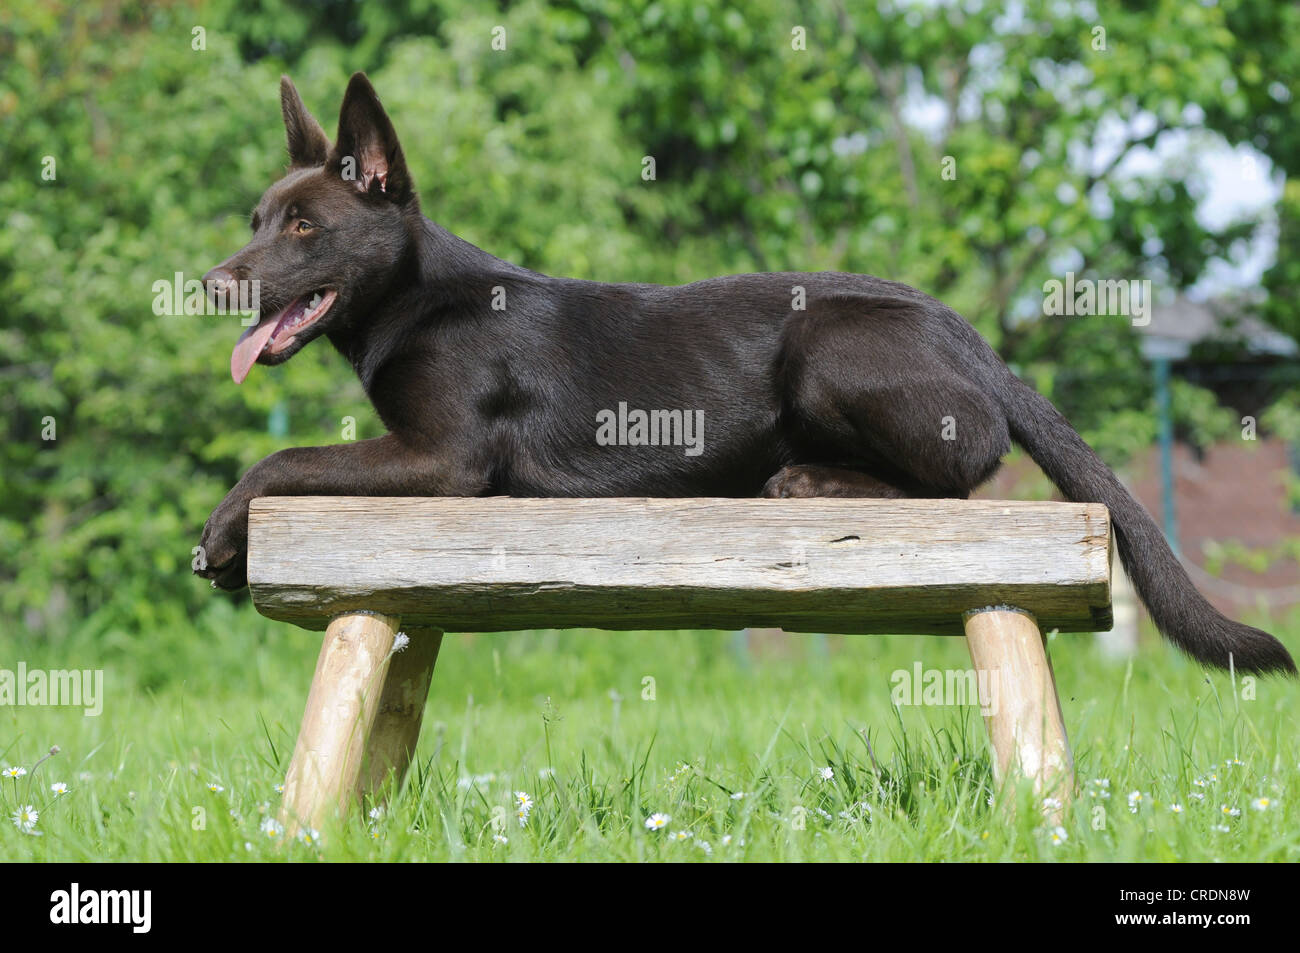 Australian Kelpie, chocolate coloured, lying on a wooden bench Stock Photo